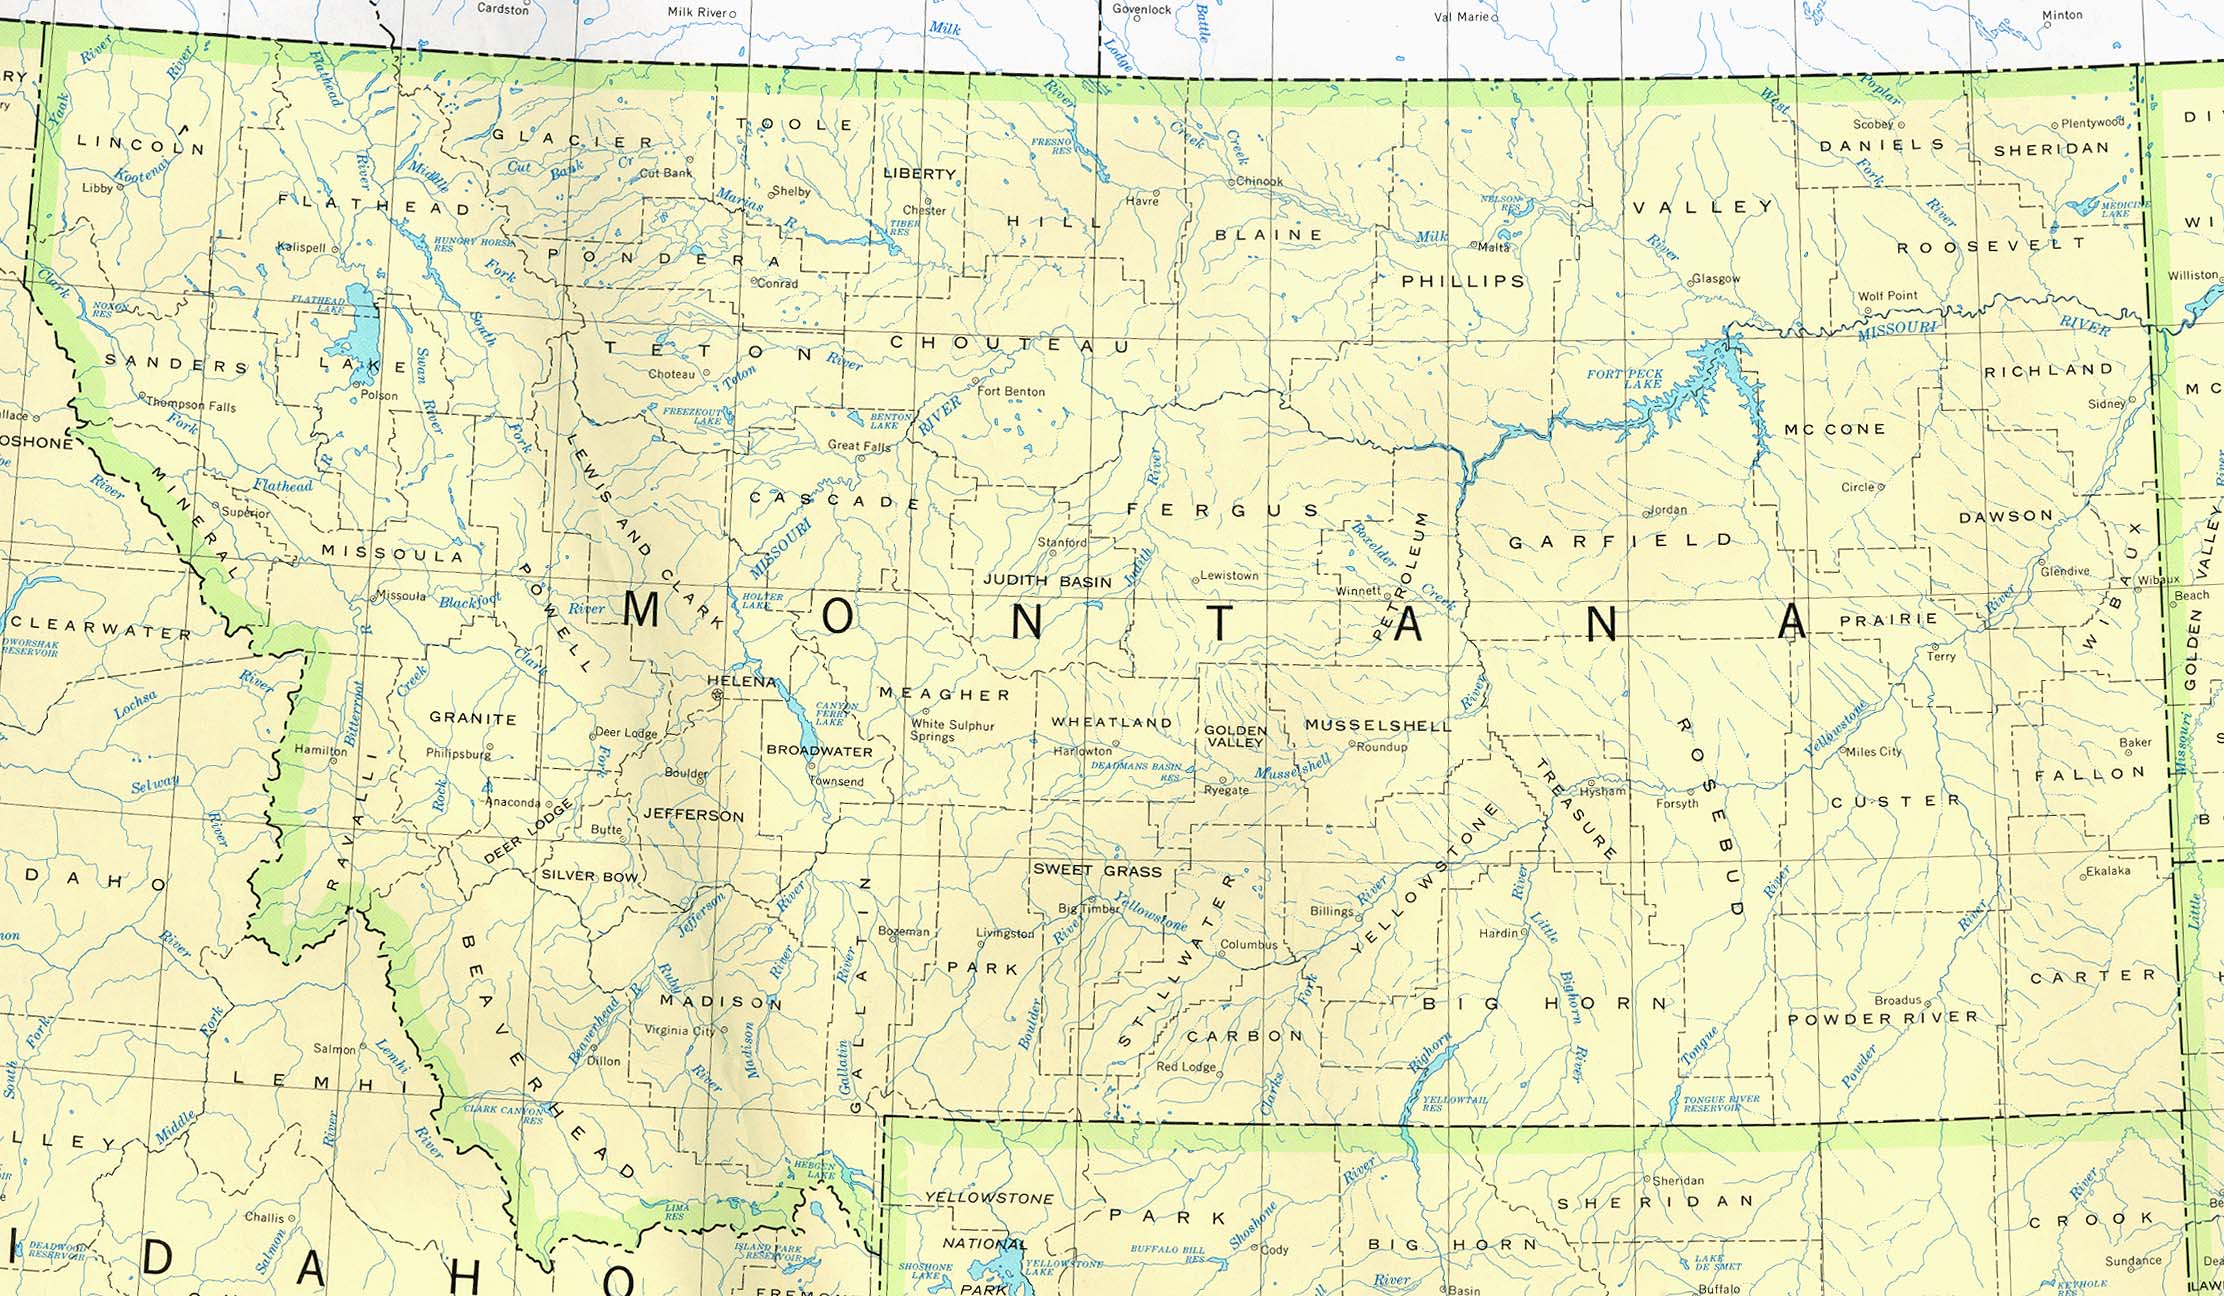 United States Map Montana